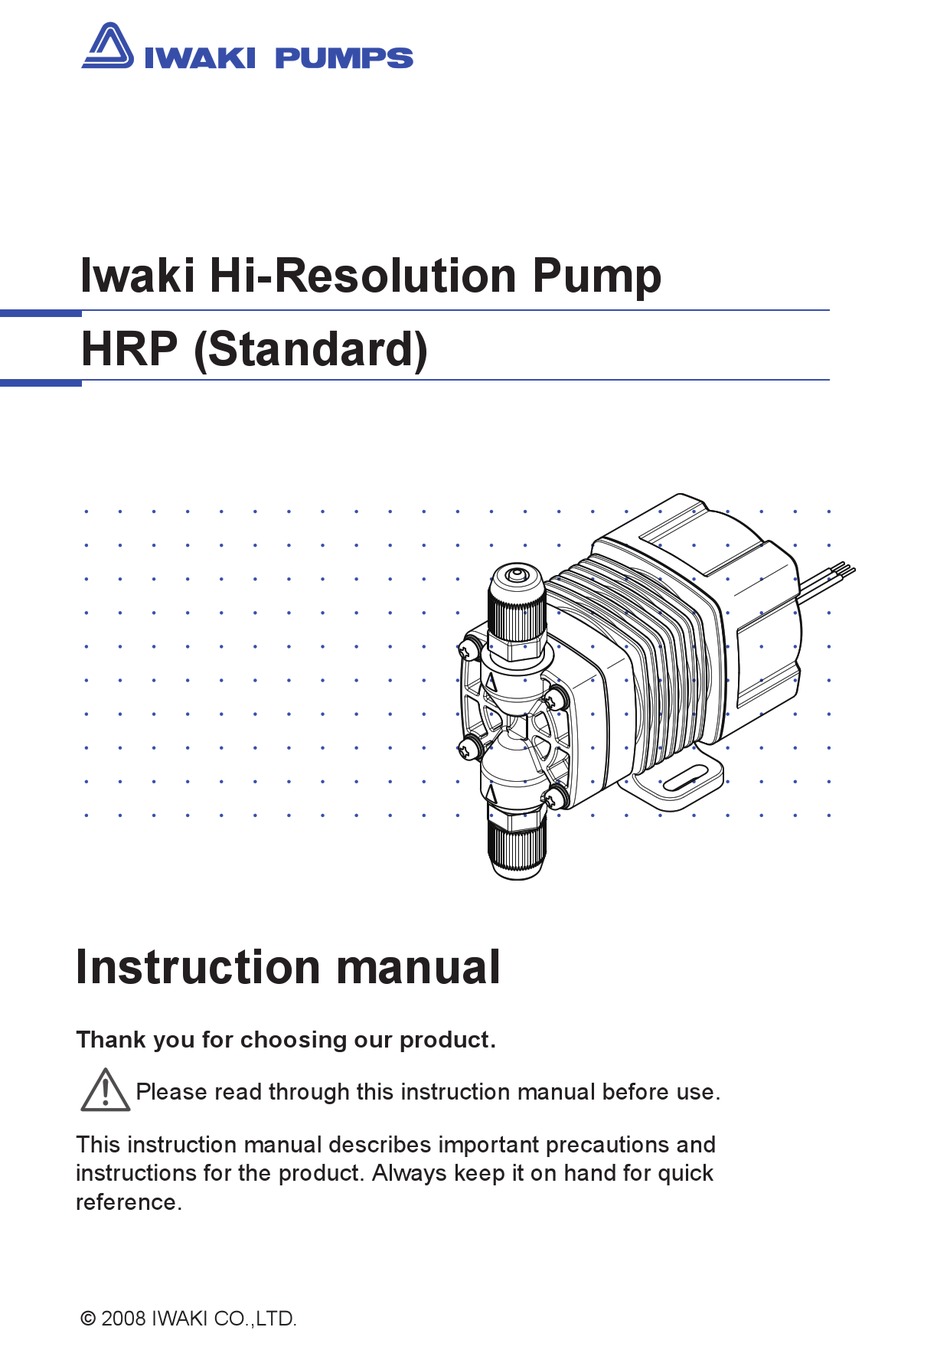 IWAKI PUMPS HRP-54V MANUAL Pdf Download | ManualsLib